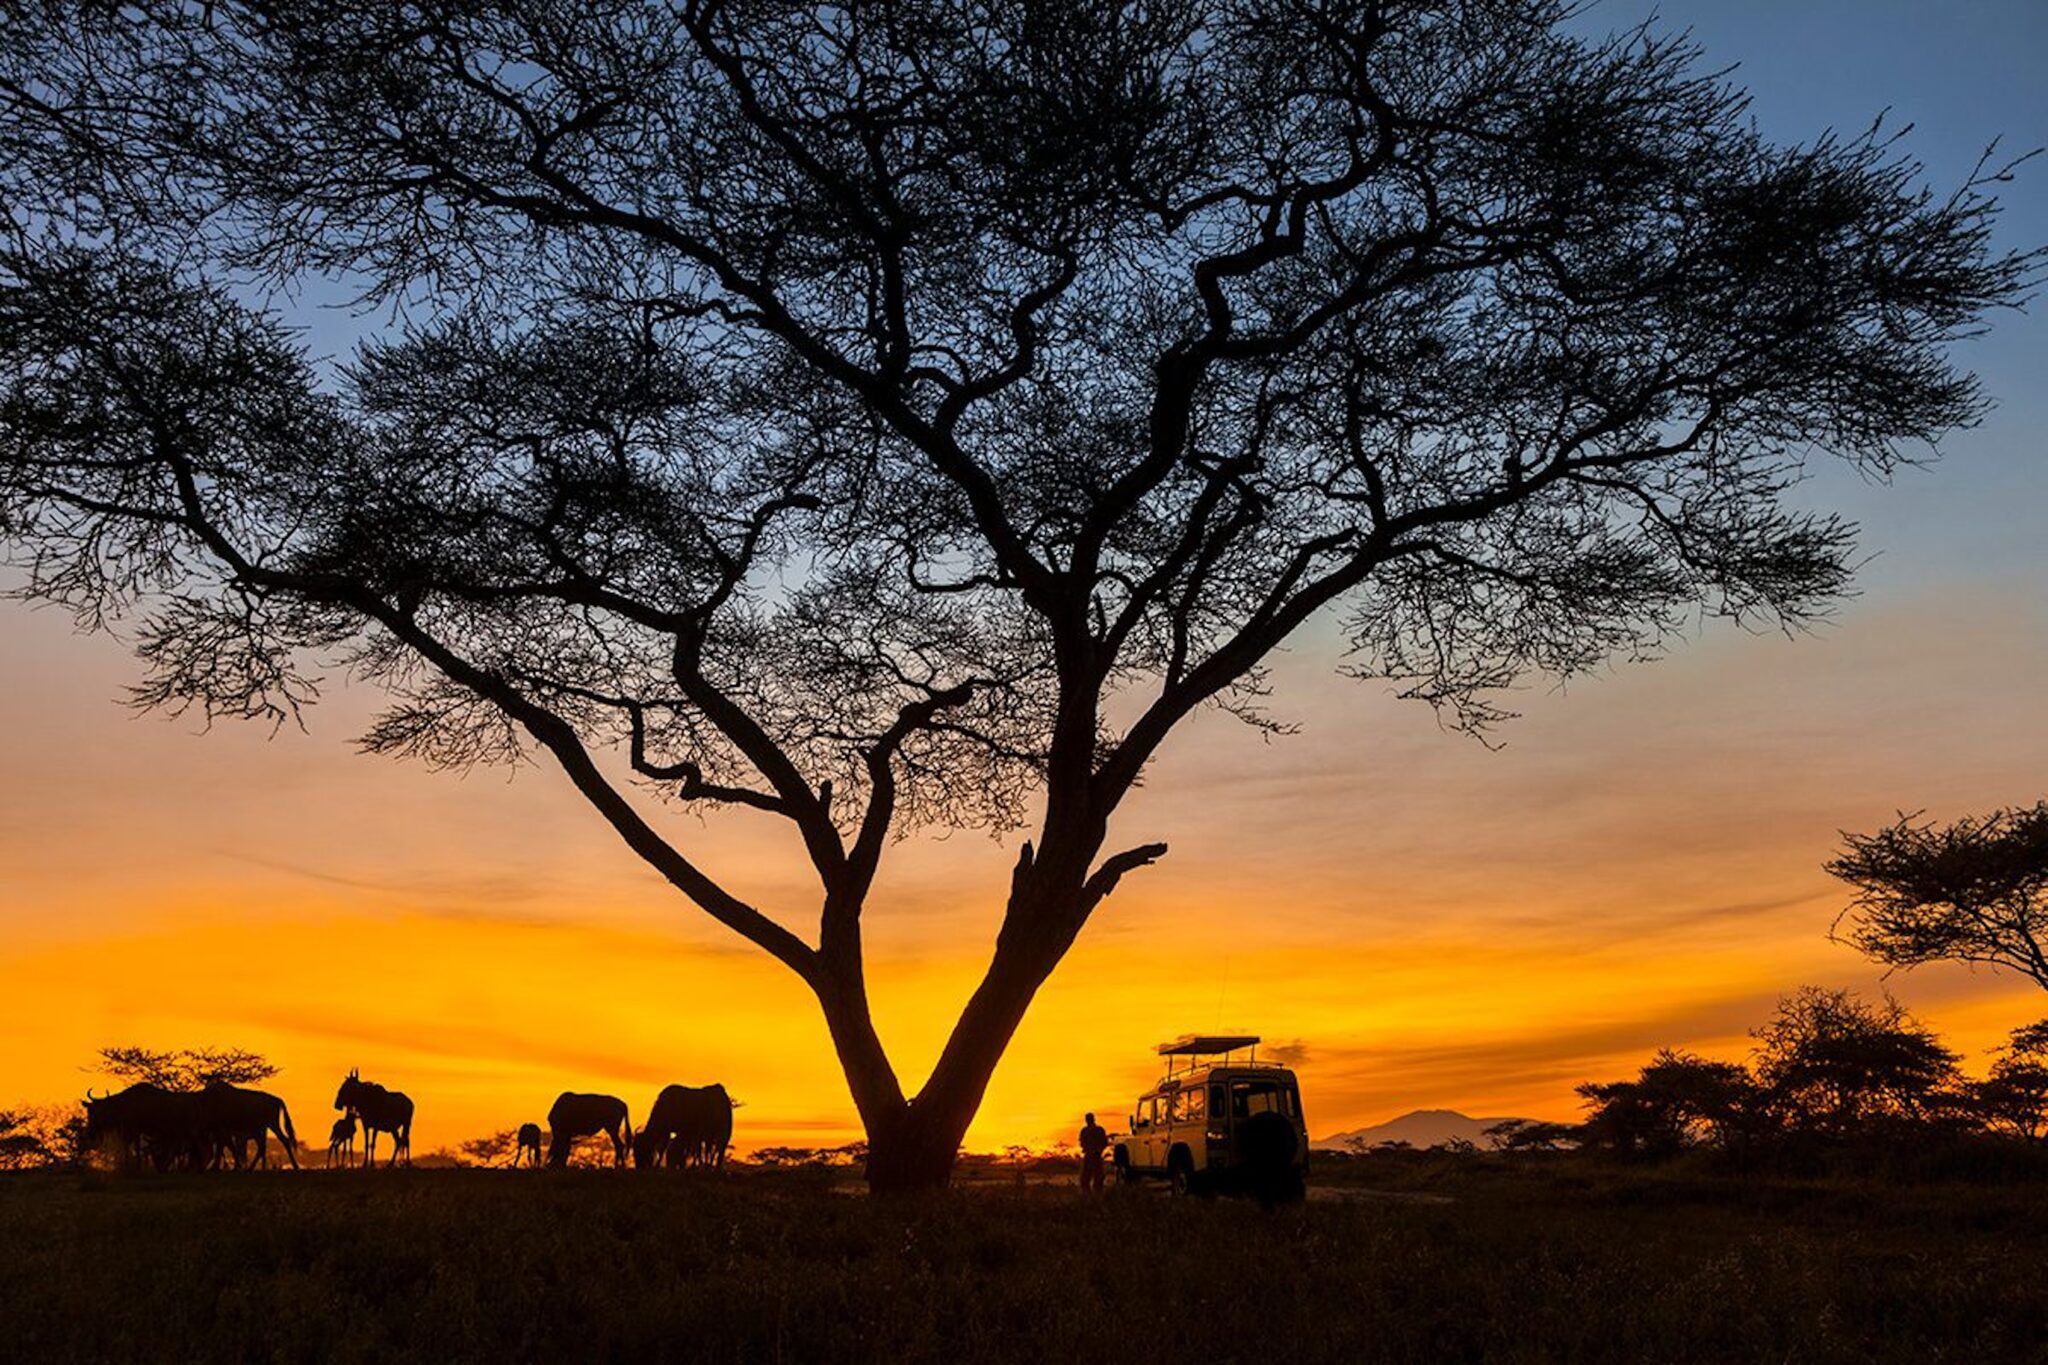 Sunset on a private safari run by Thomson Safaris. Source: Thomson Safaris